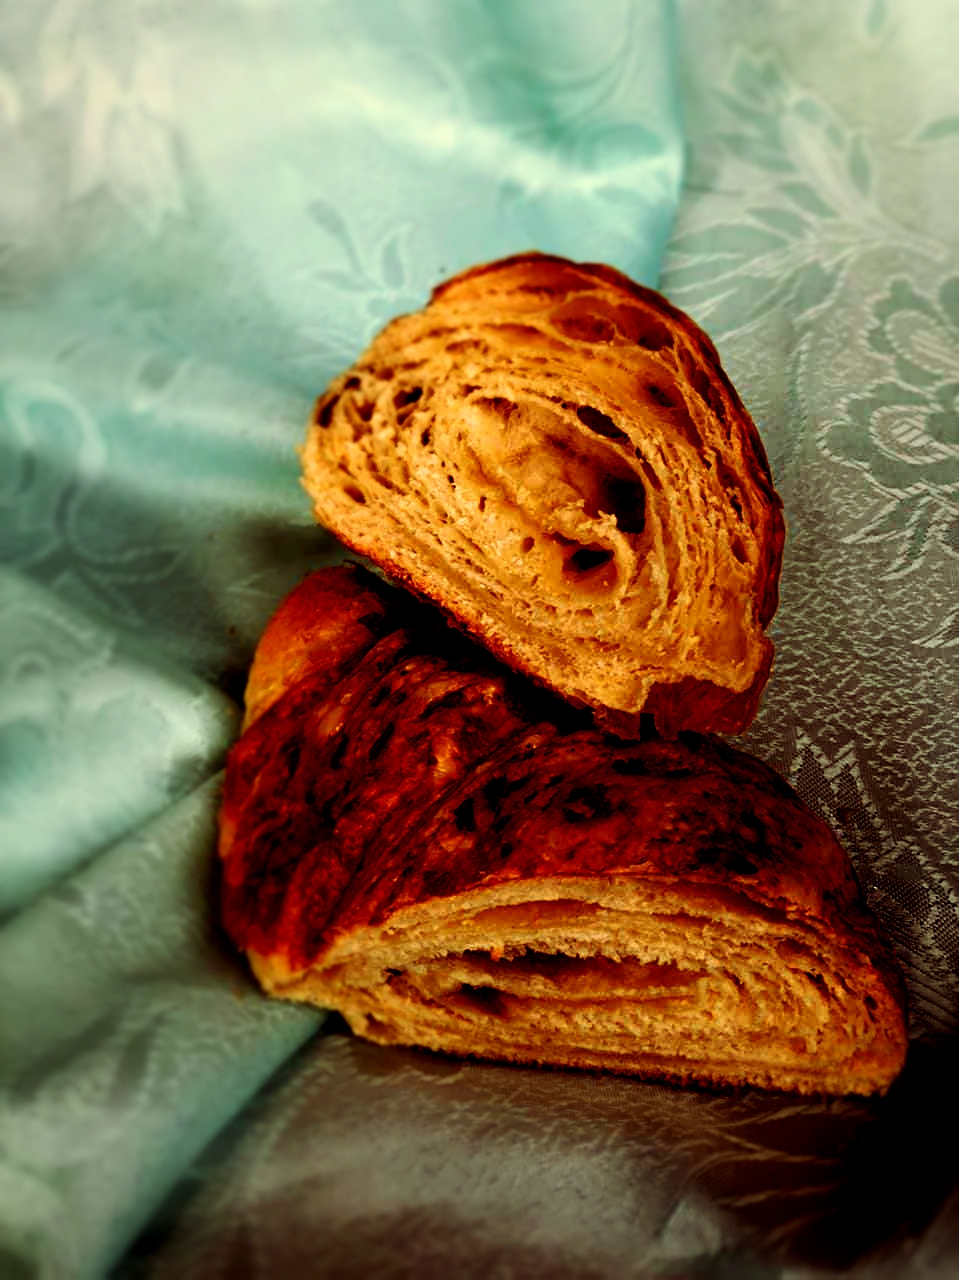 tk_croissant.jpg